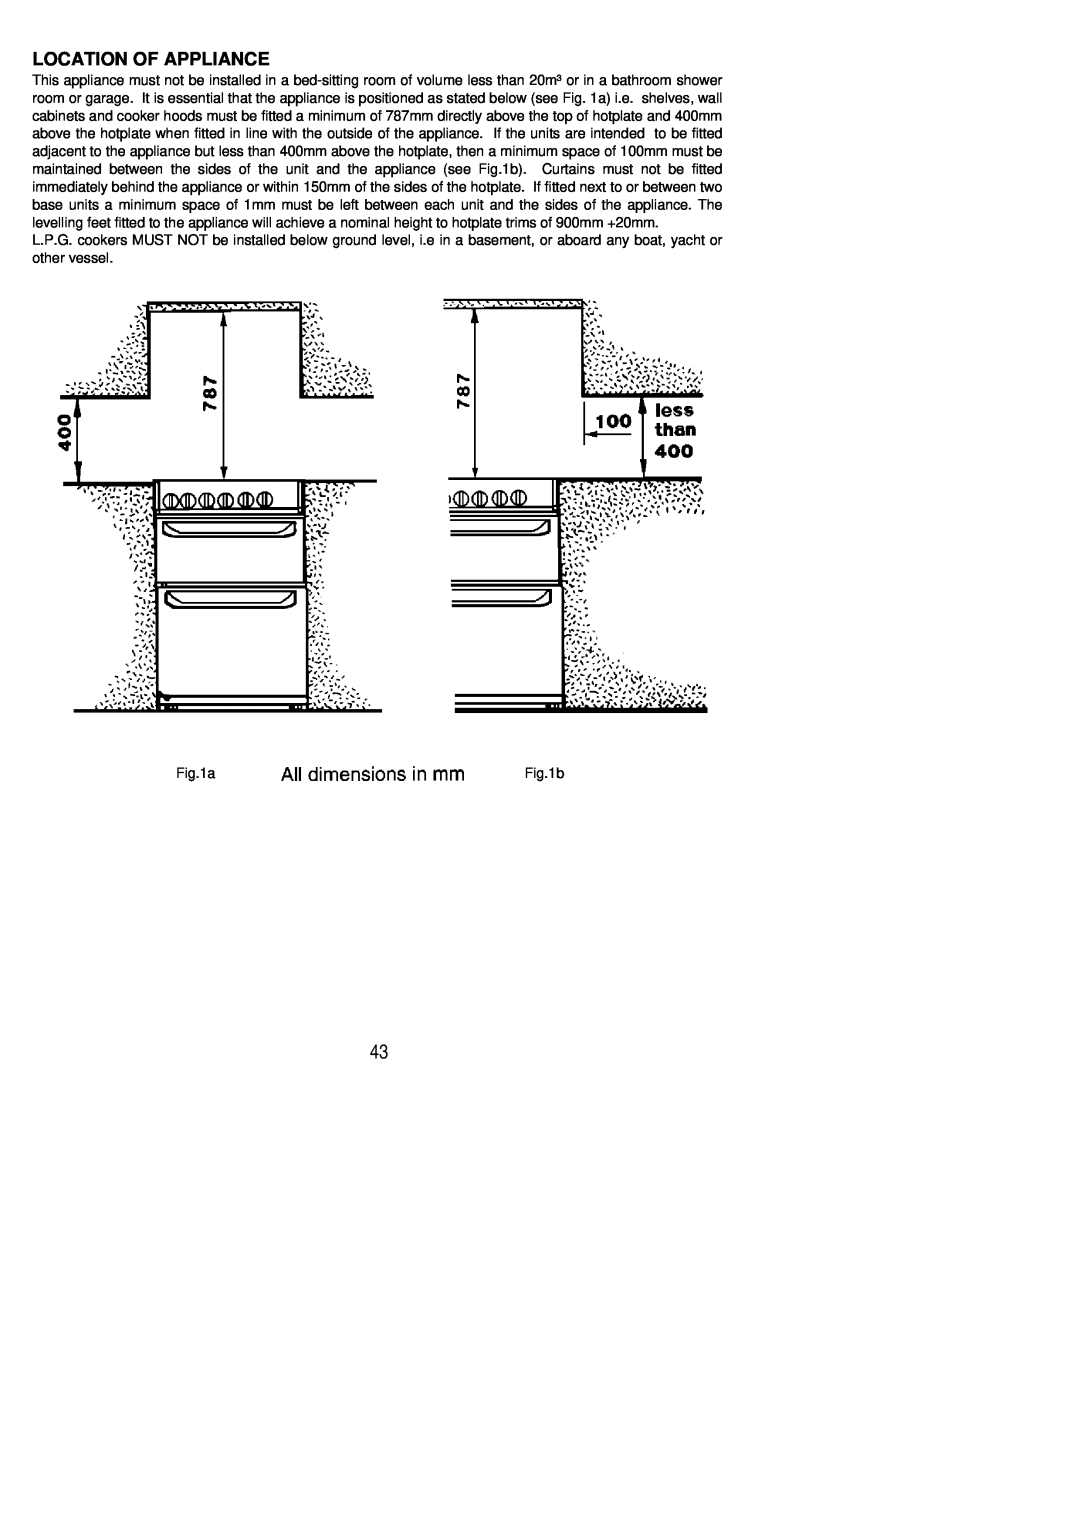 Parkinson Cowan SG 553 installation instructions Location Of Appliance, aFig.1b 